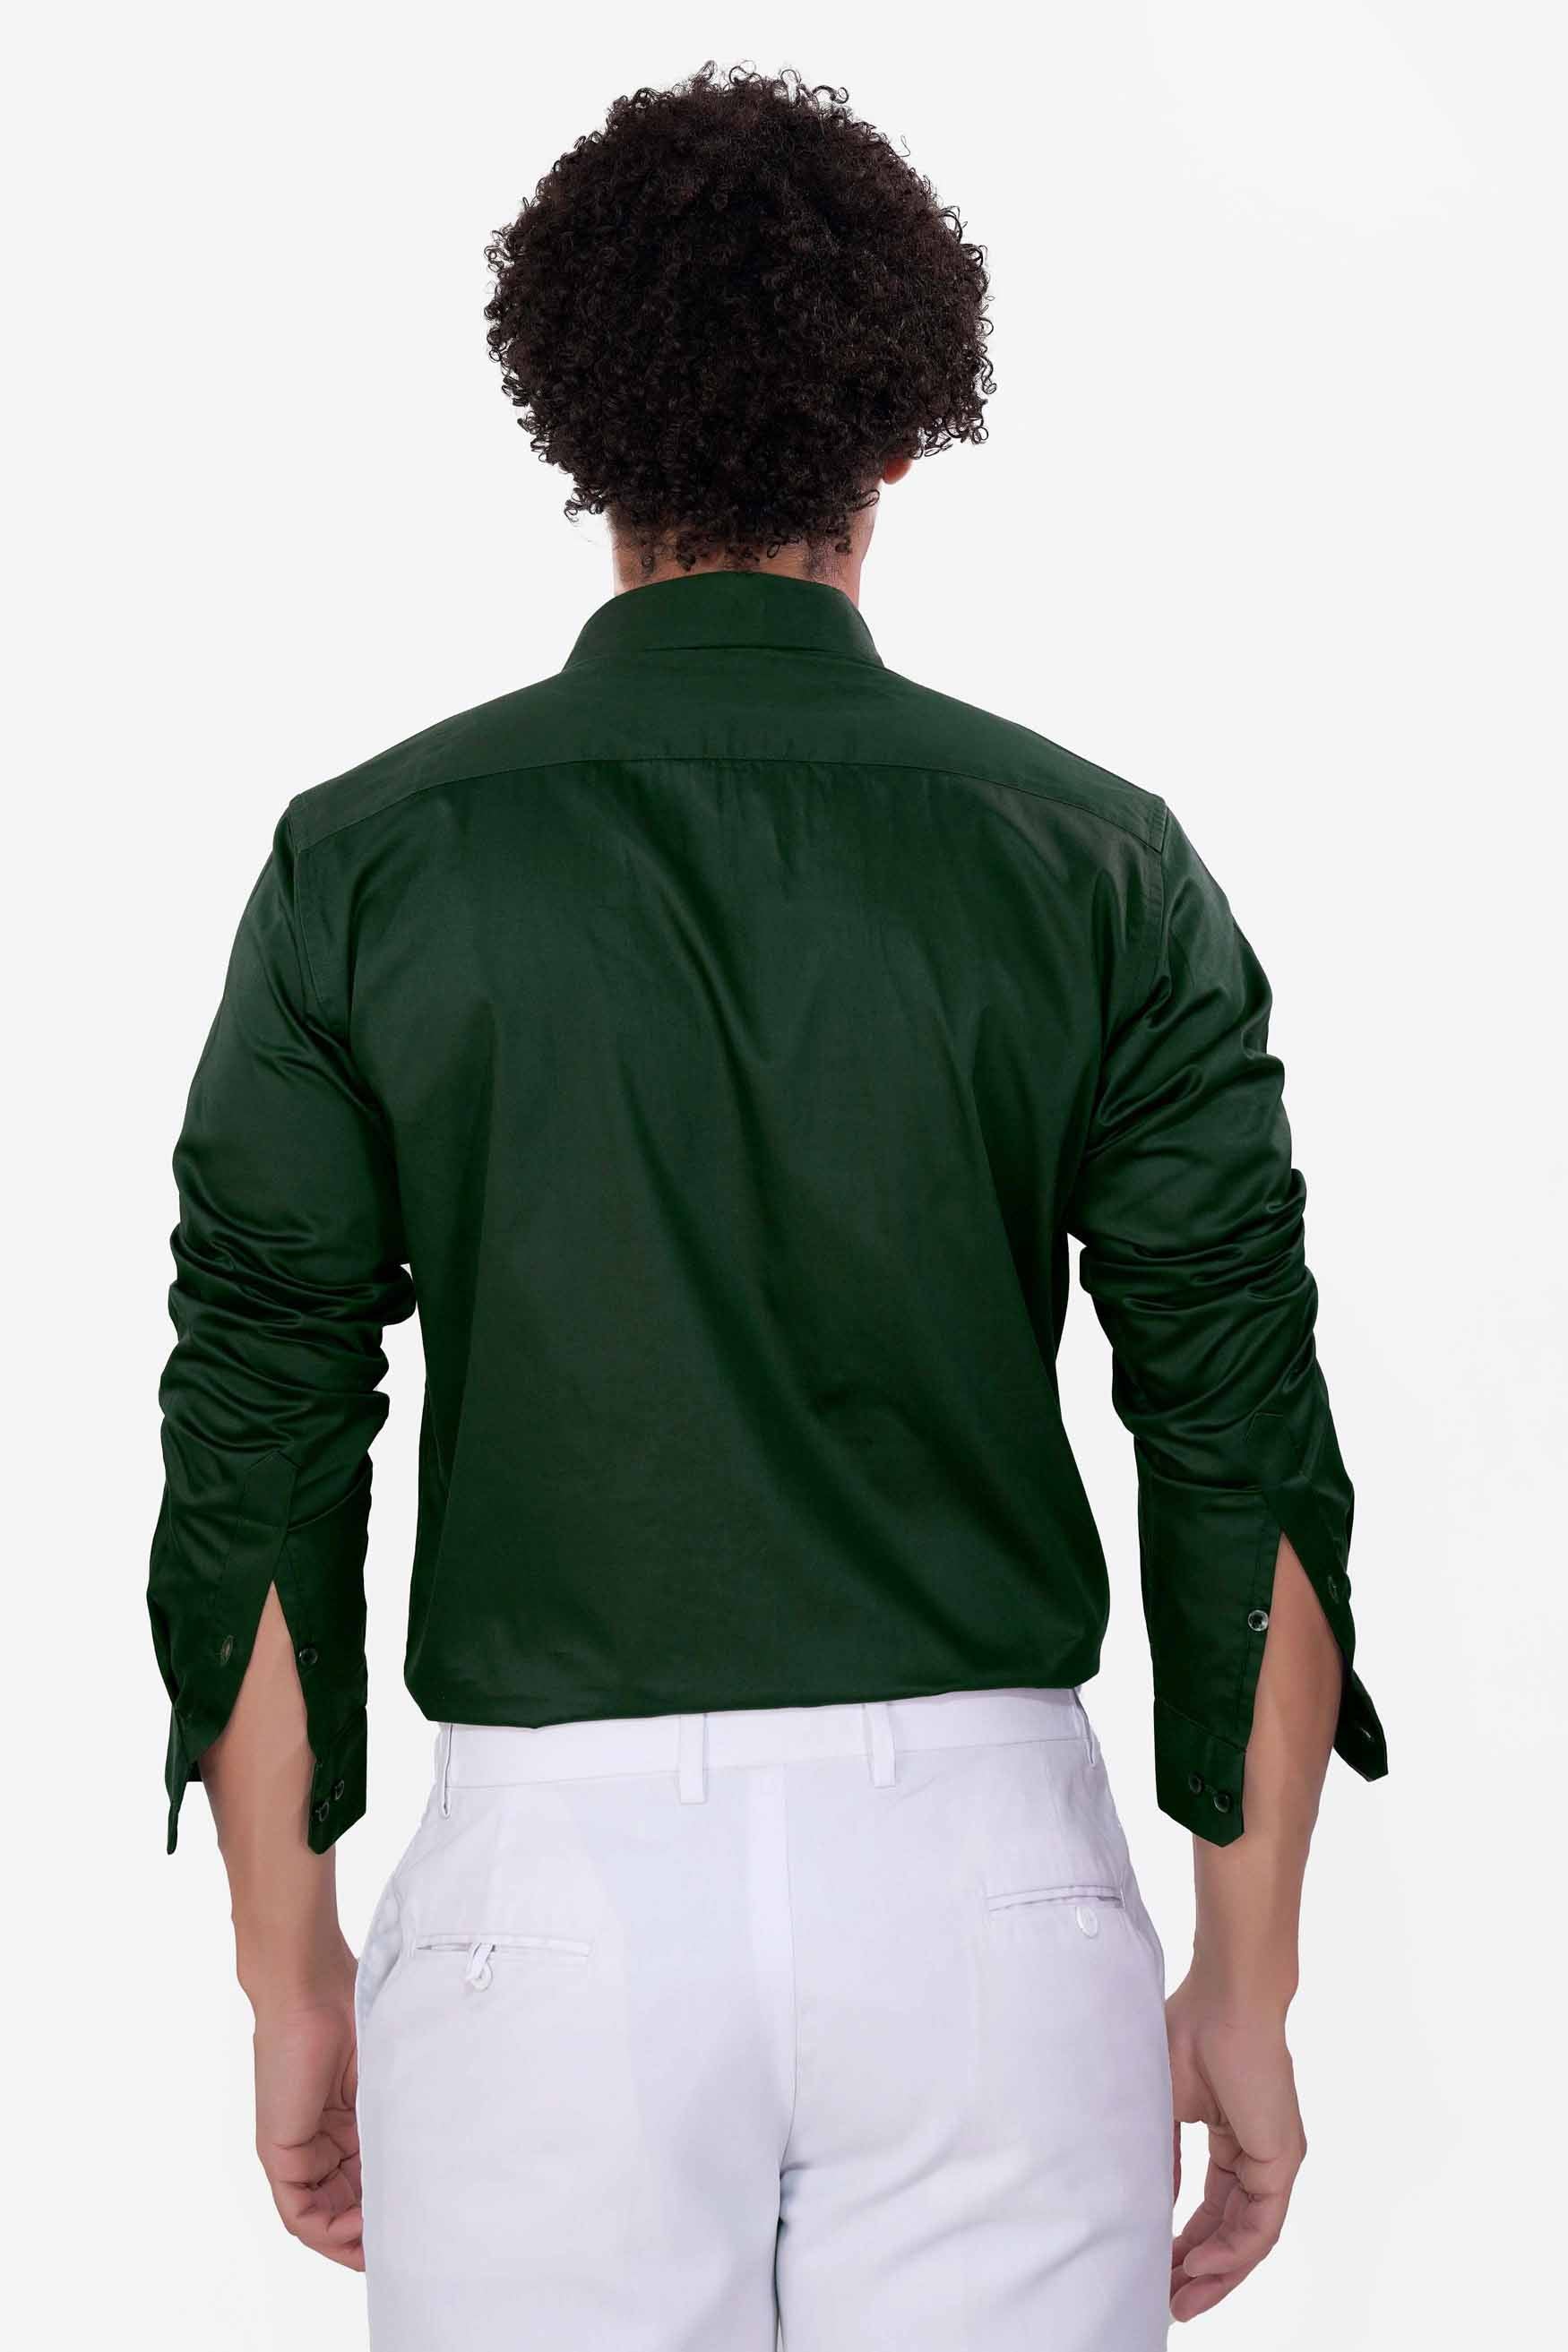 Lunar Green Subtle Sheen Super  Soft Premium Cotton Tuxedo Shirt